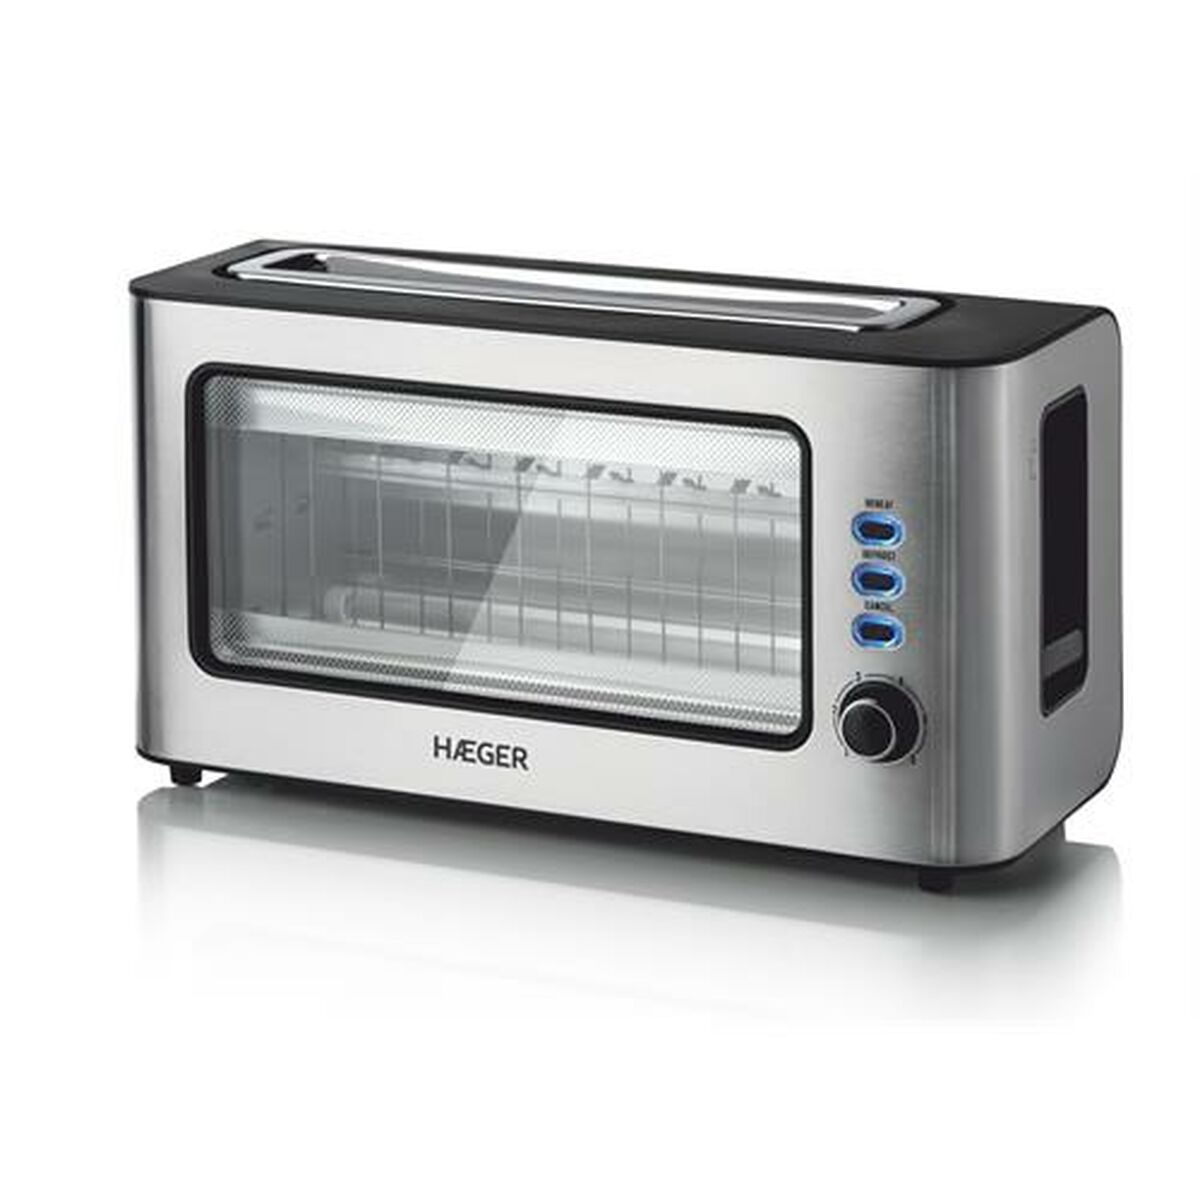 Kaufe Toaster Haeger TO-100.014A 1000 W bei AWK Flagship um € 65.00